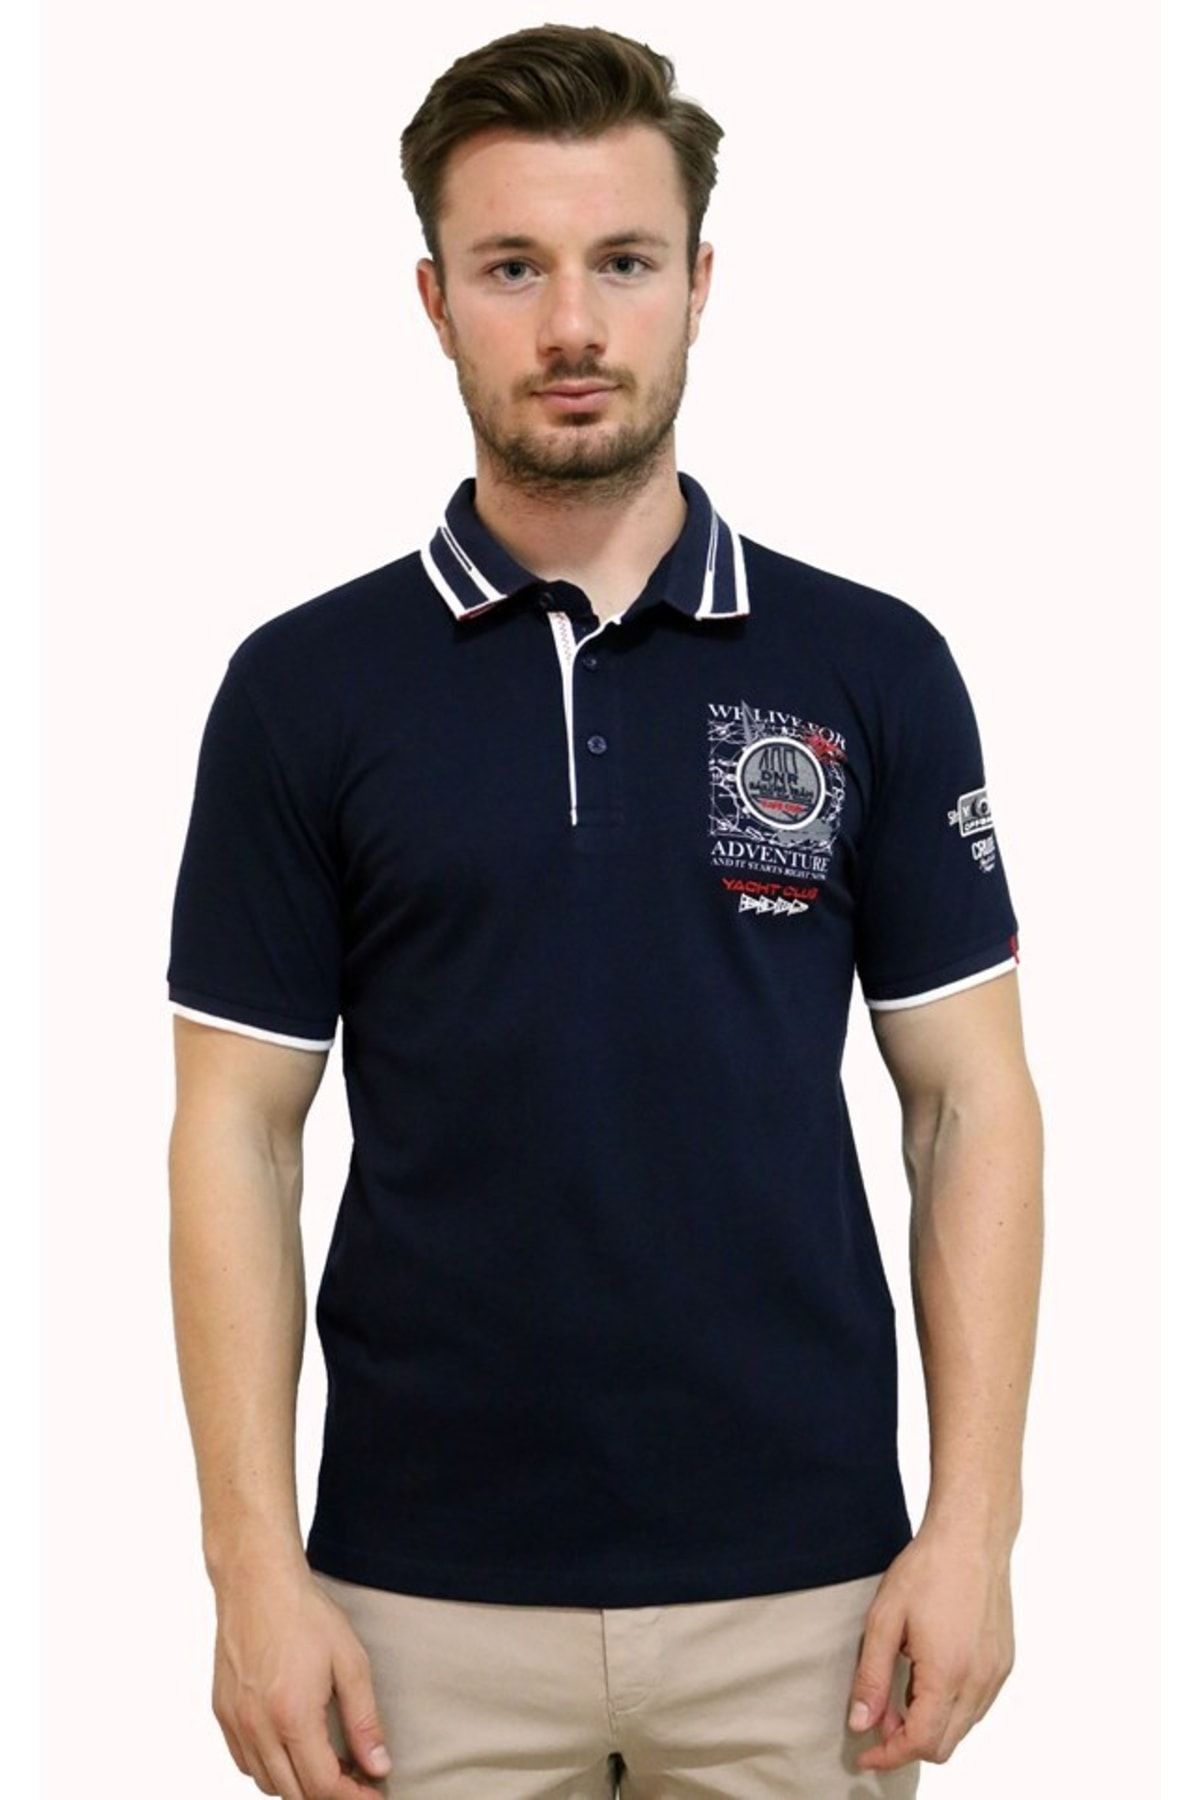 Diandor Erkek T-shirt Lacivert/navy 2217020